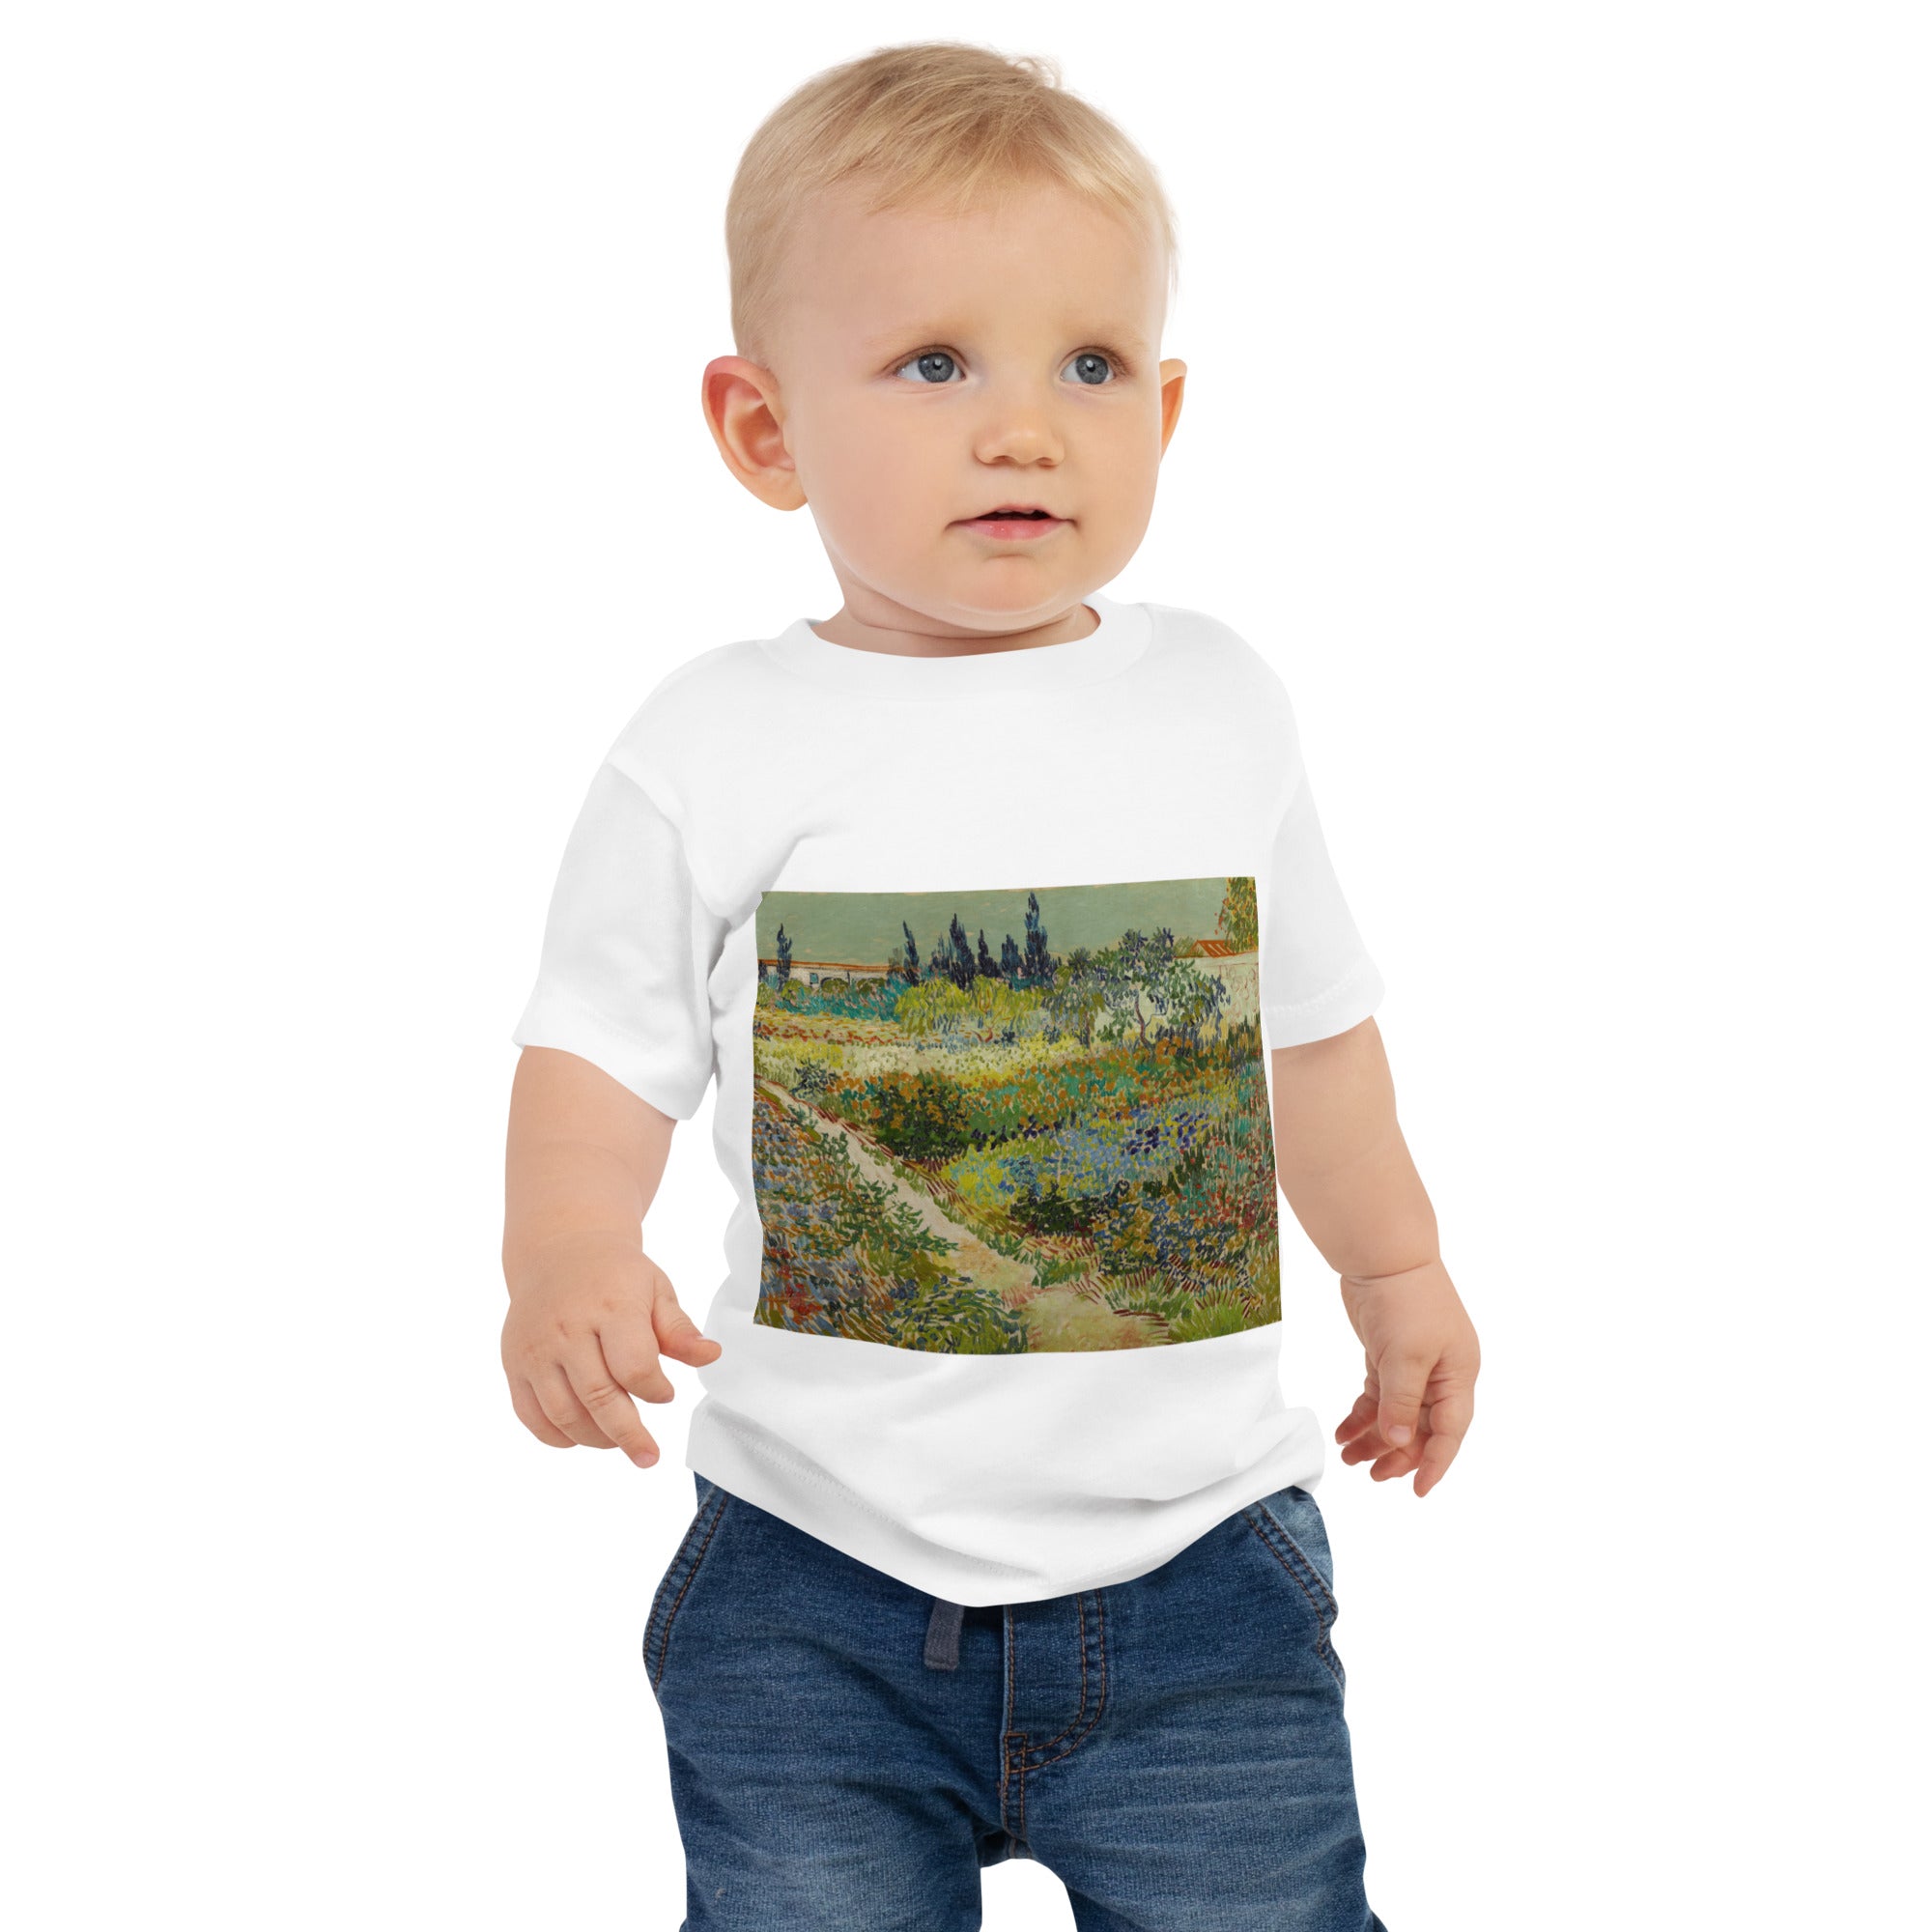 Vincent van Gogh „Garten in Arles“, berühmtes Gemälde, Baby-T-Shirt, Premium-Kunst-T-Shirt für Babys